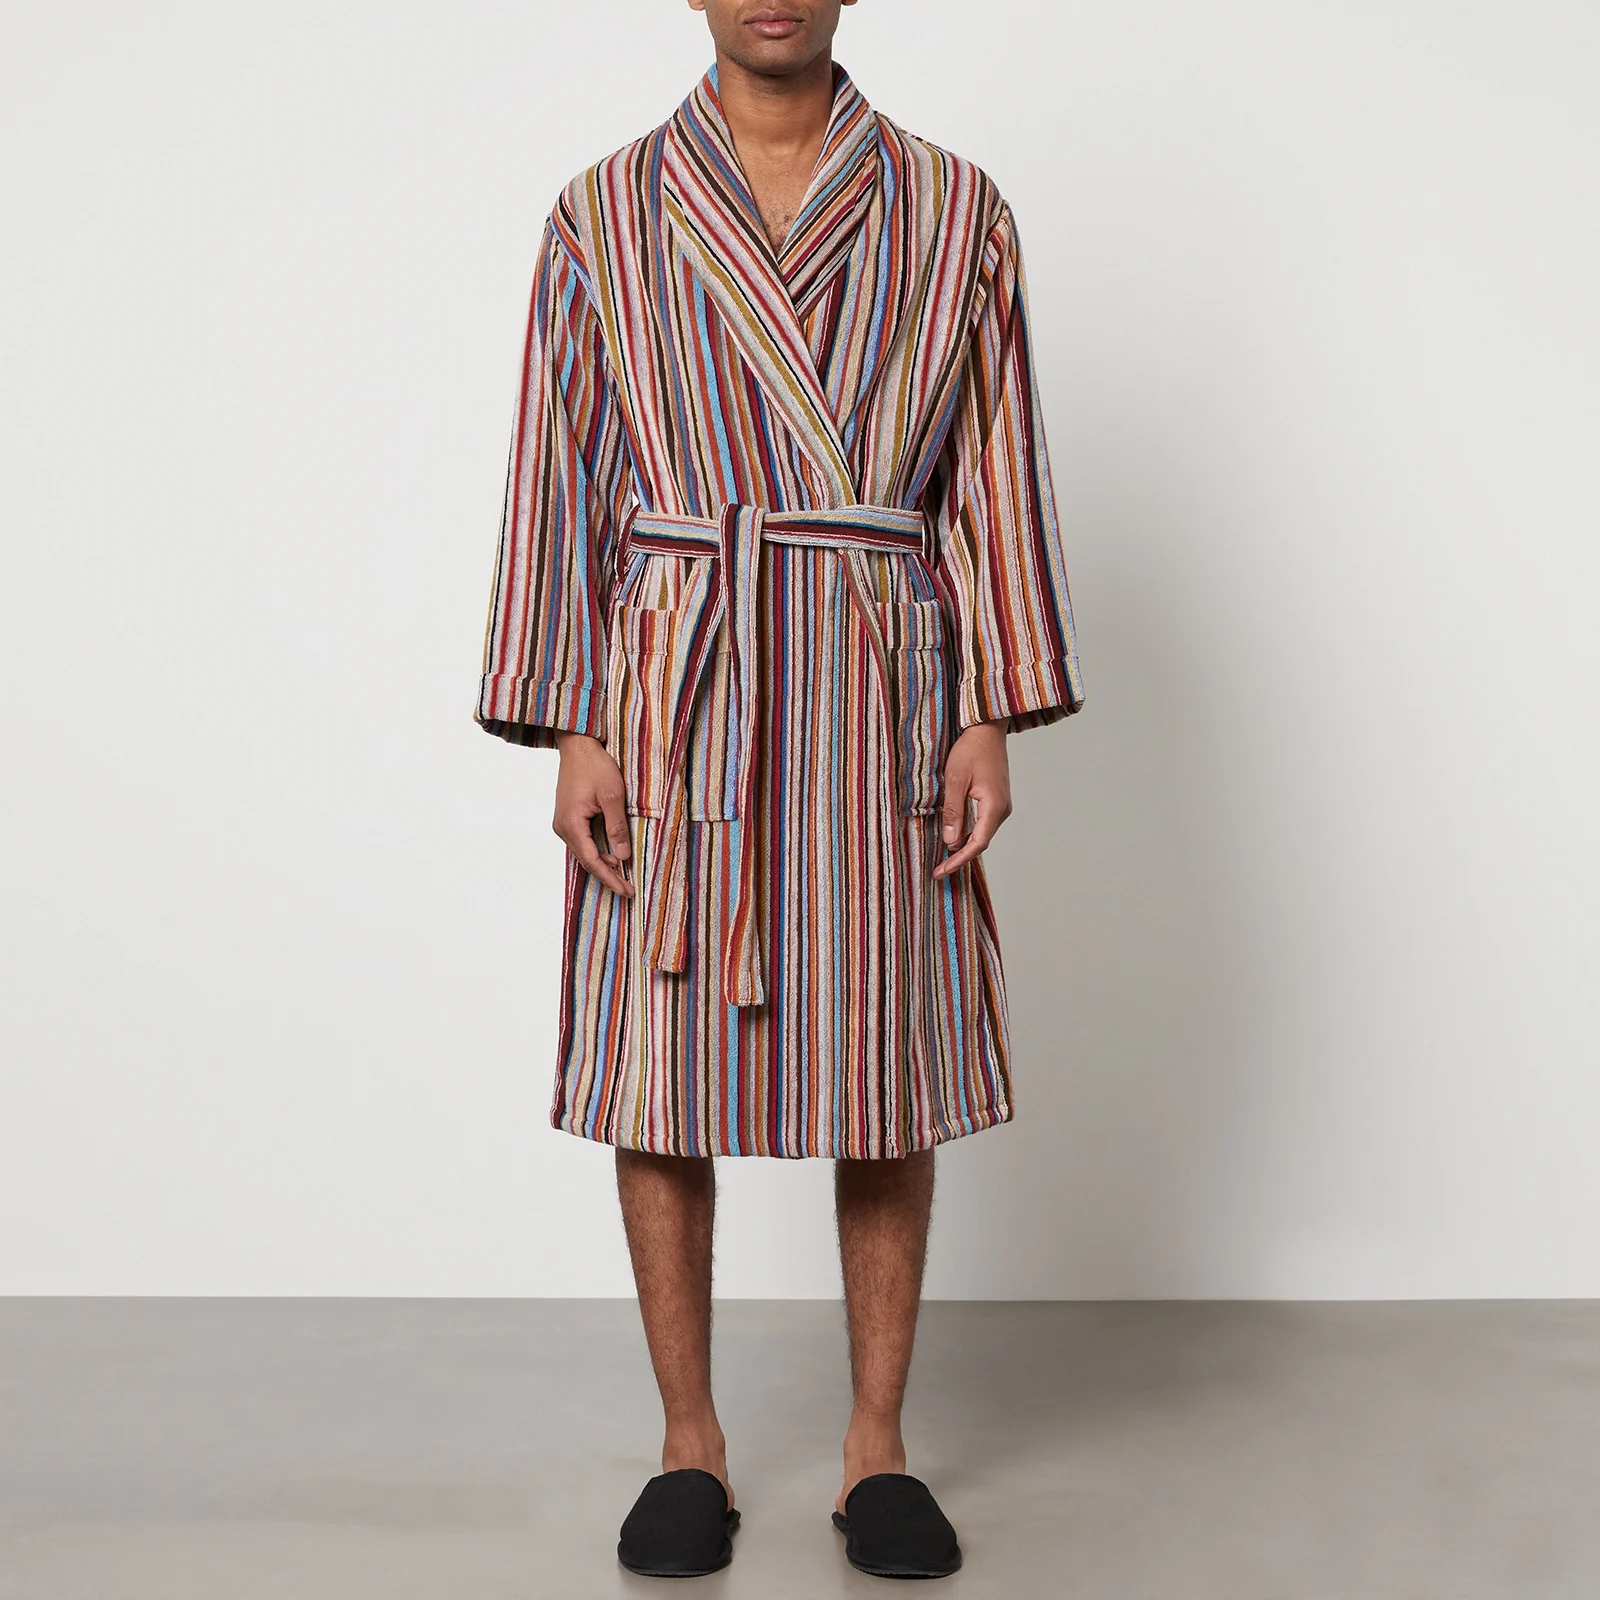 Paul Smith Men's Stripe Gown - Multi Image 1